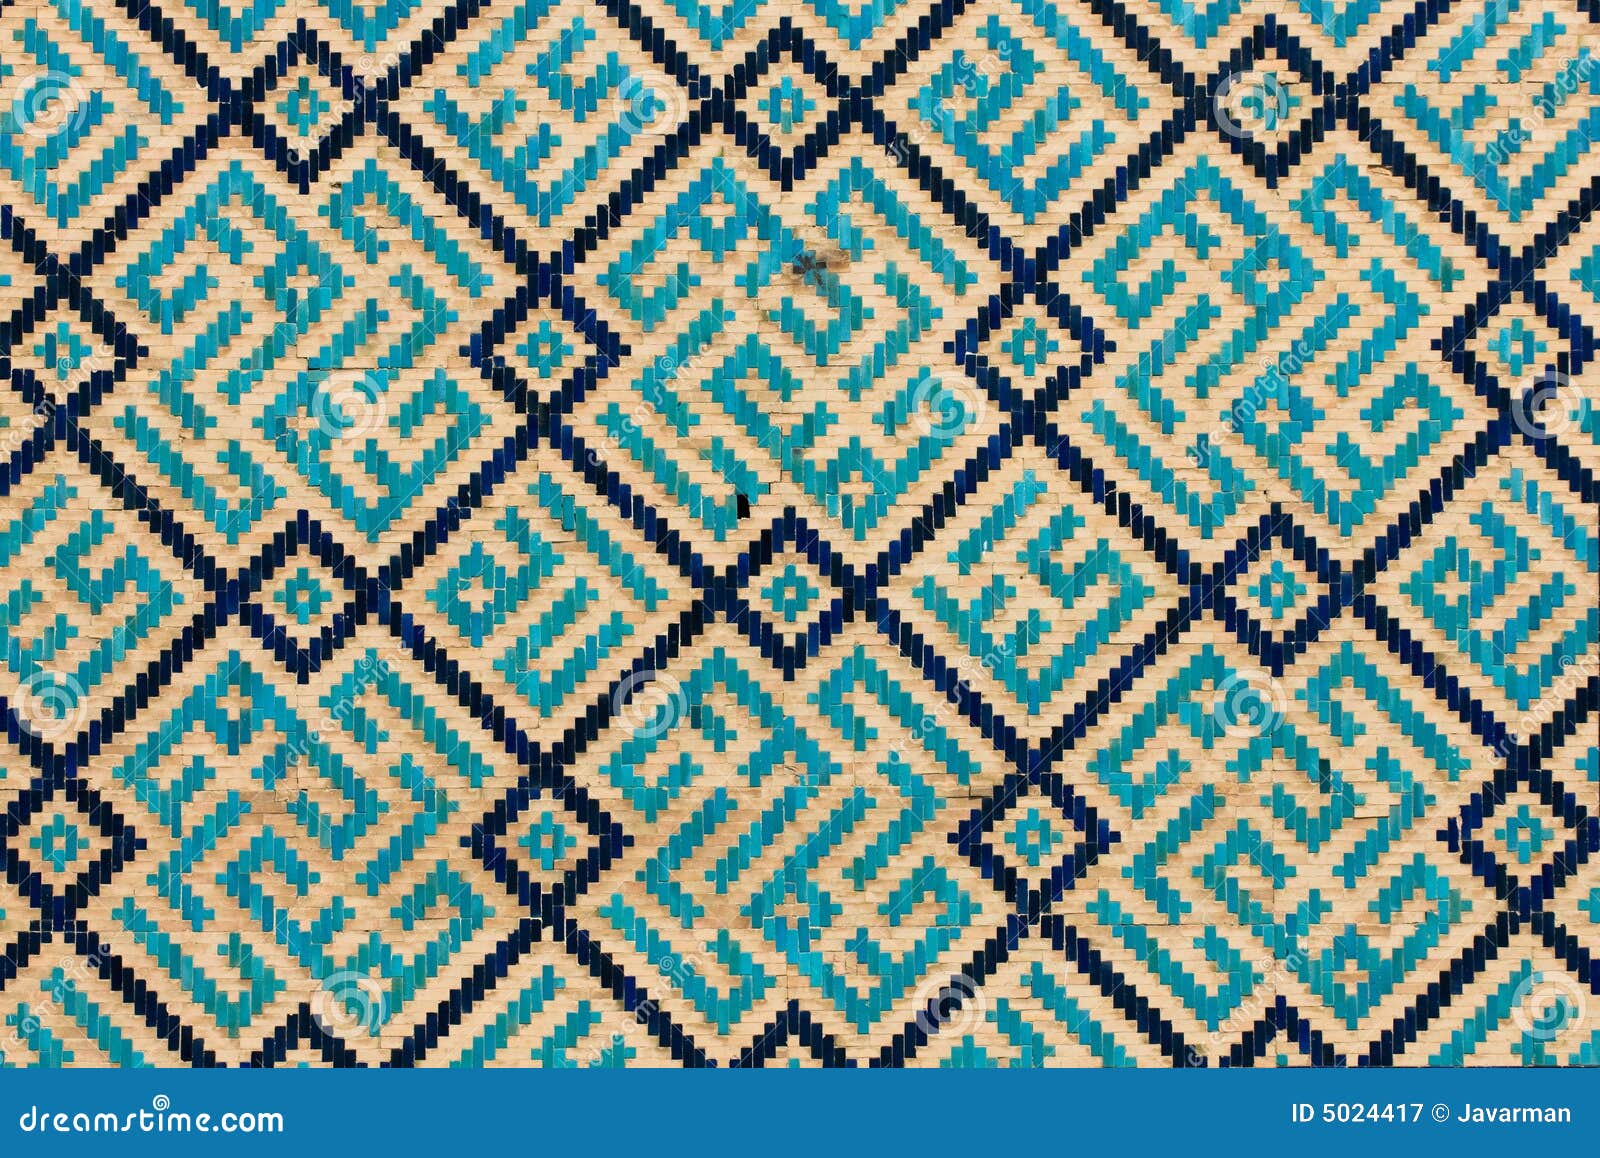 tiled background, oriental ornaments from uzbekist